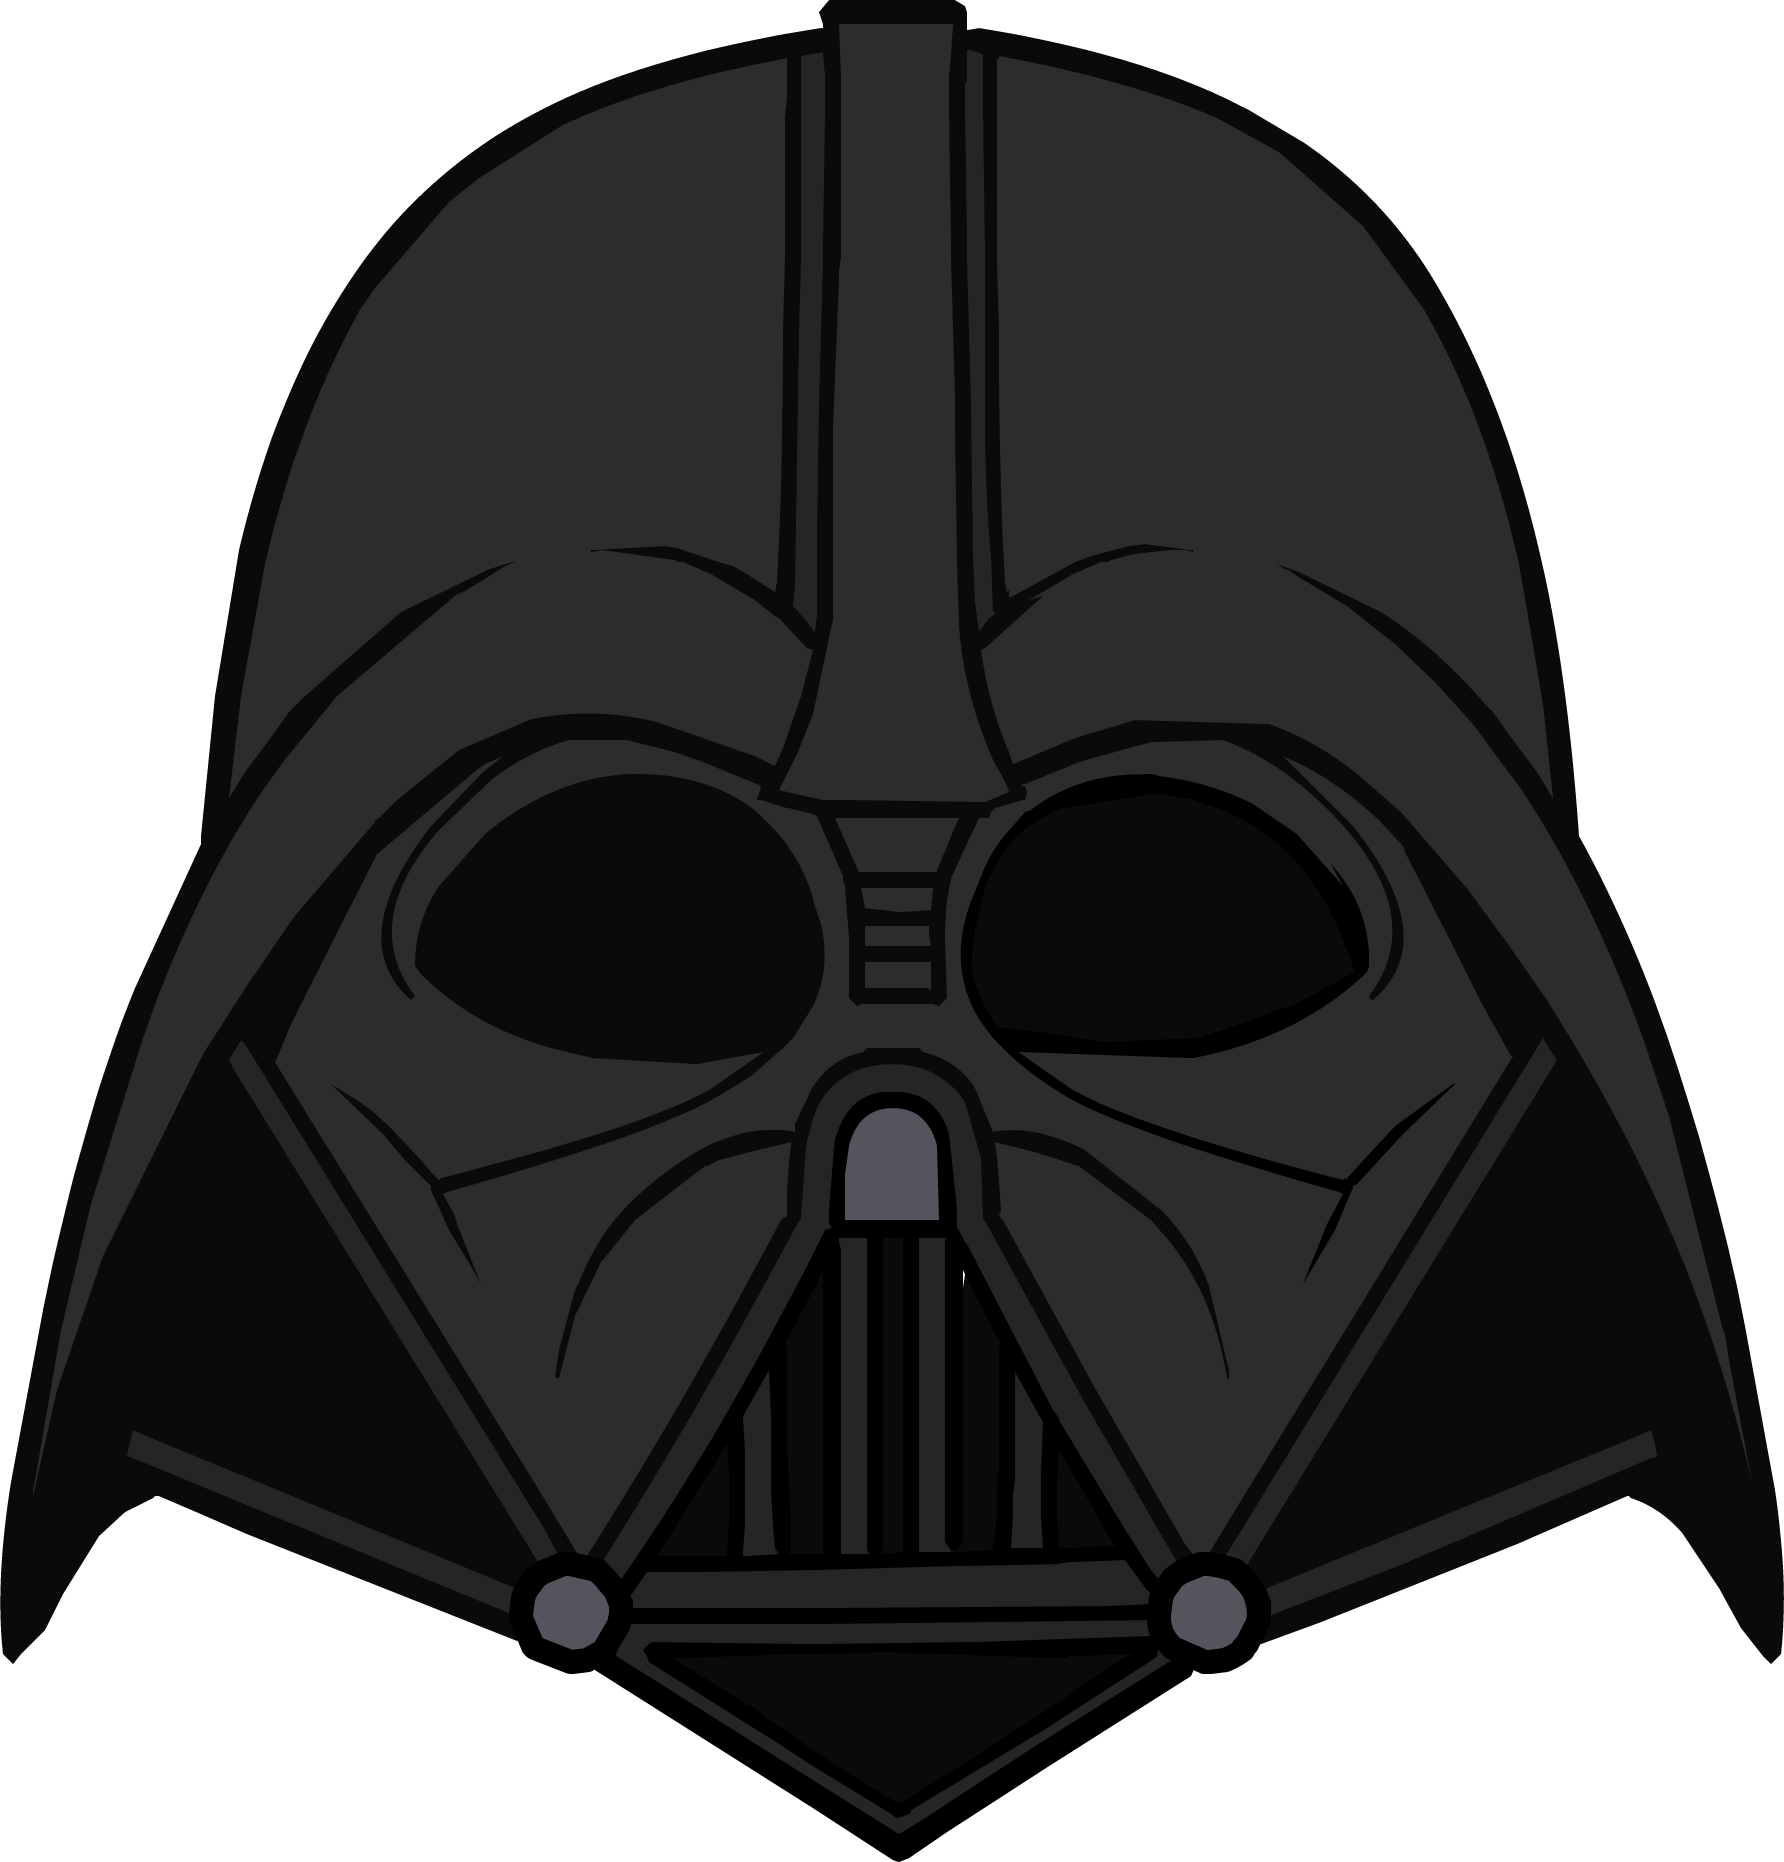 Darth Vader Mask PNG Image